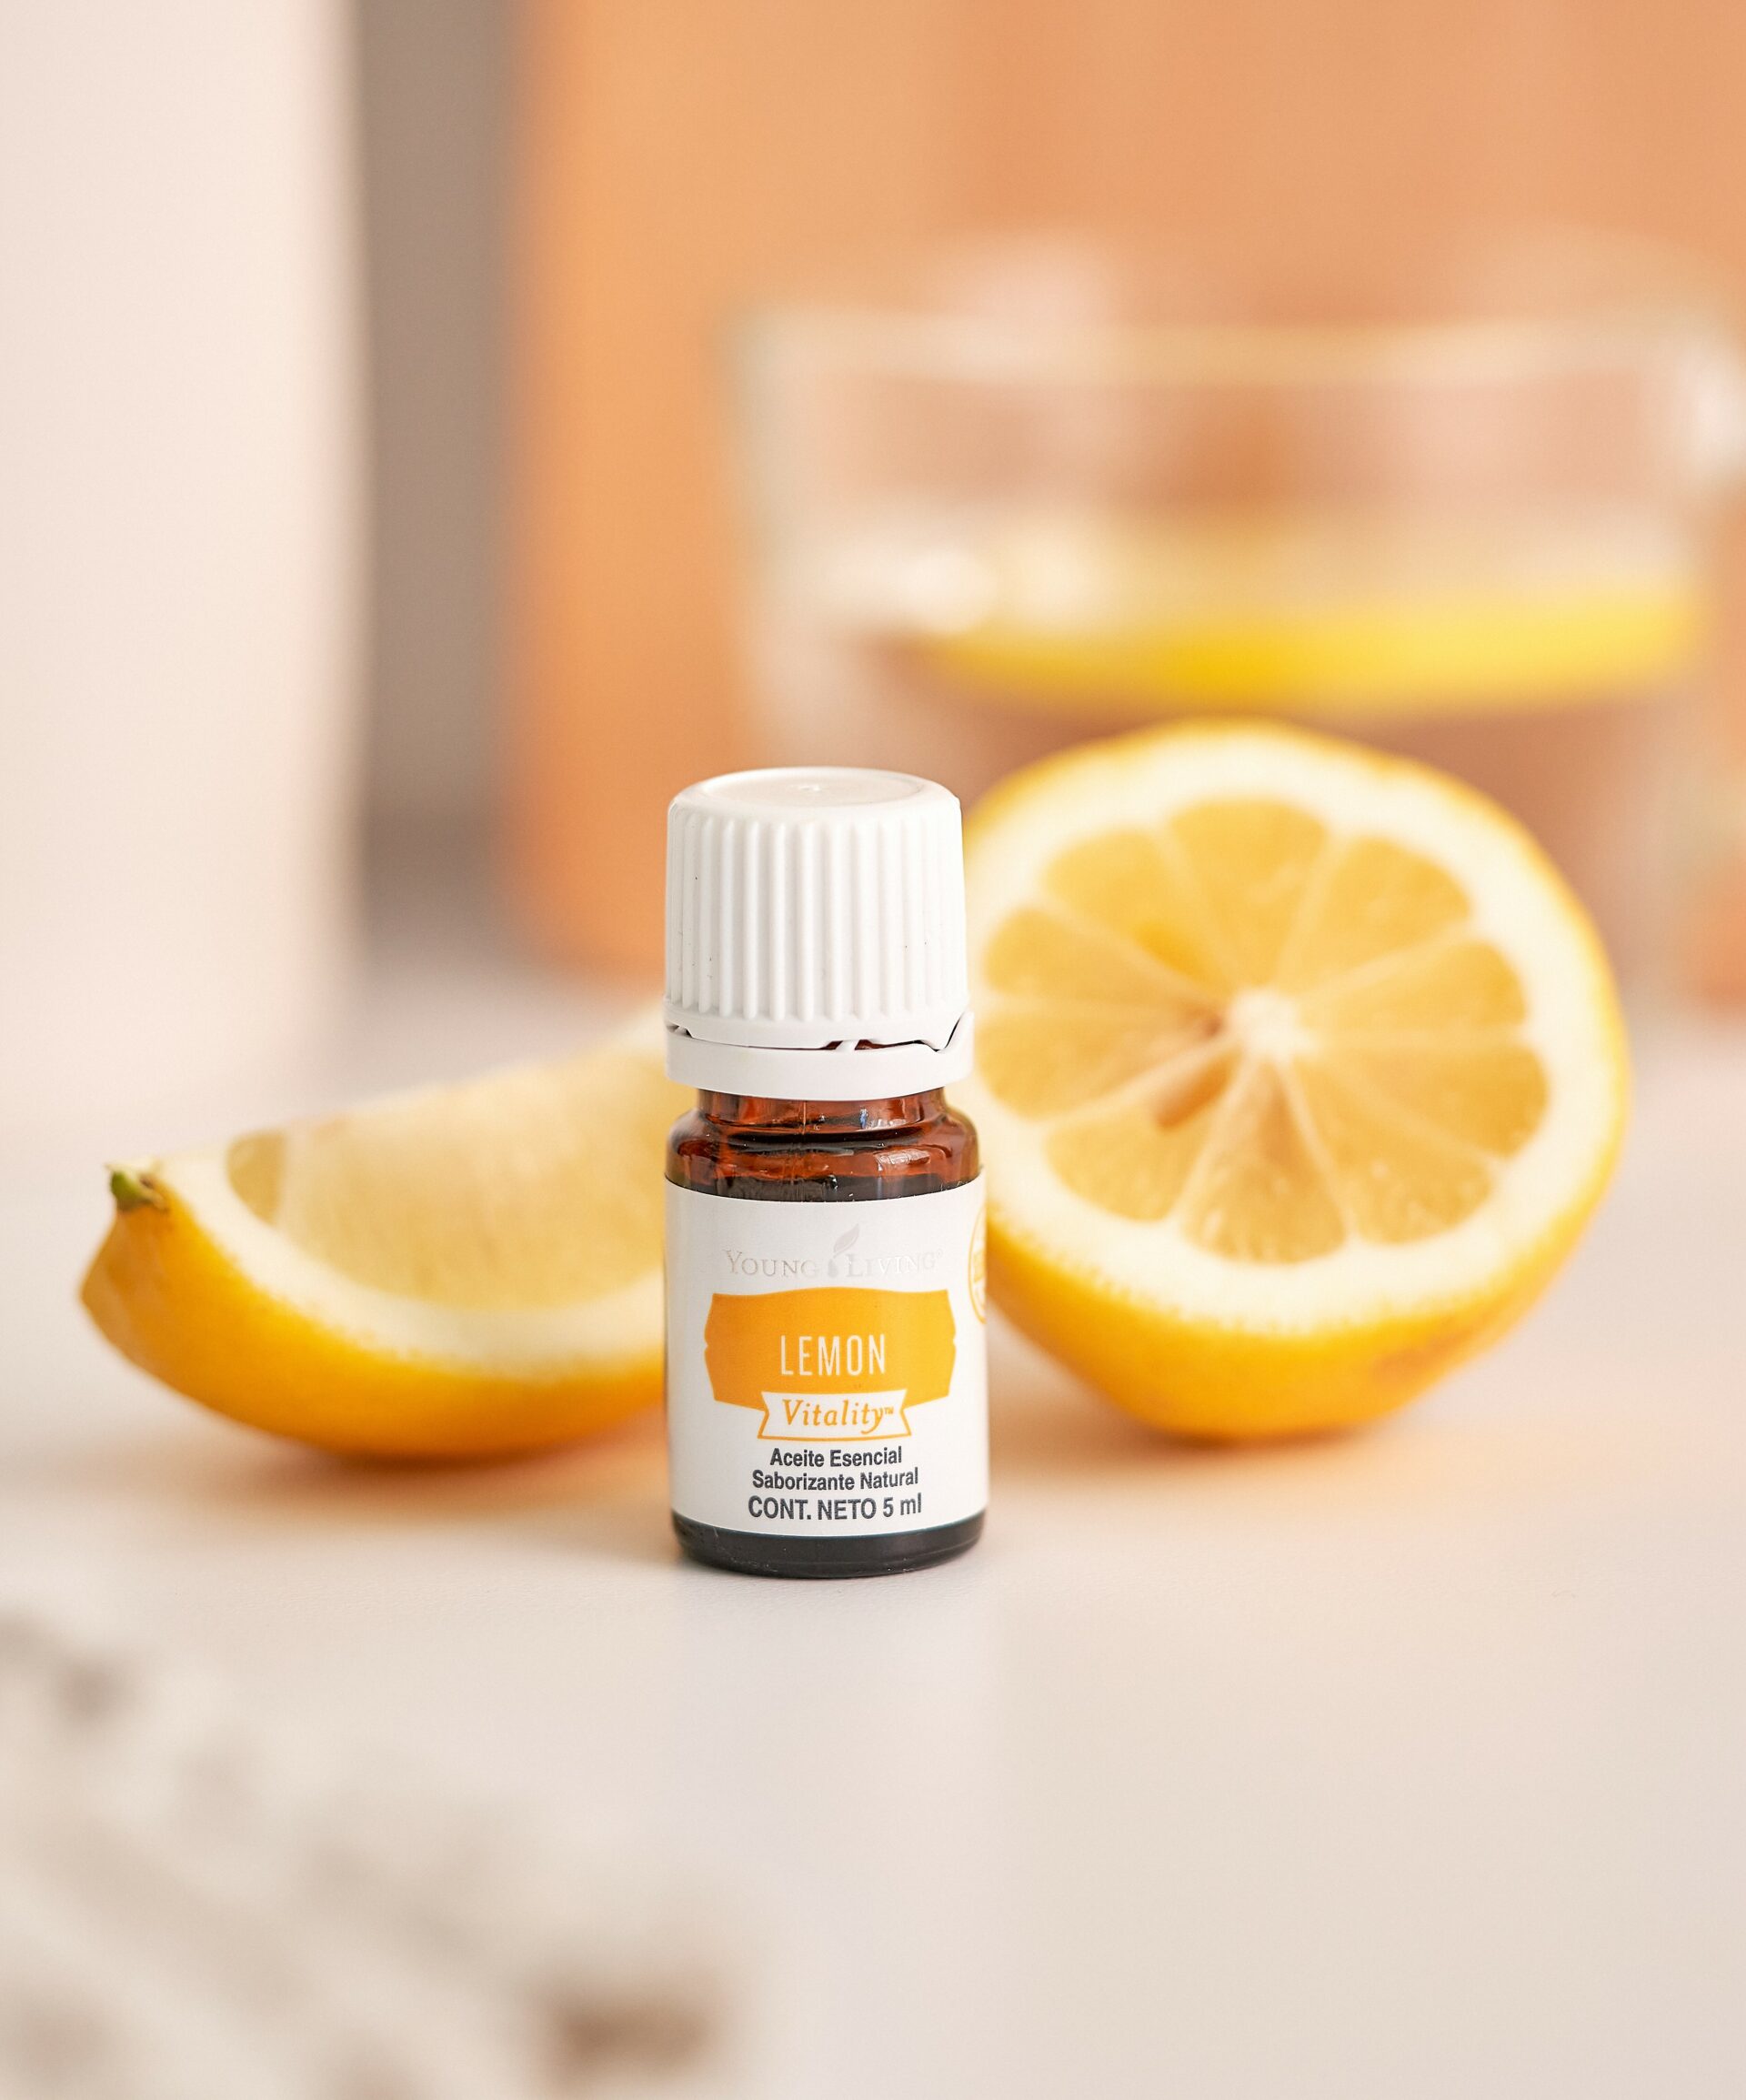 Lemon Vitality - Young Living Essential Oils 